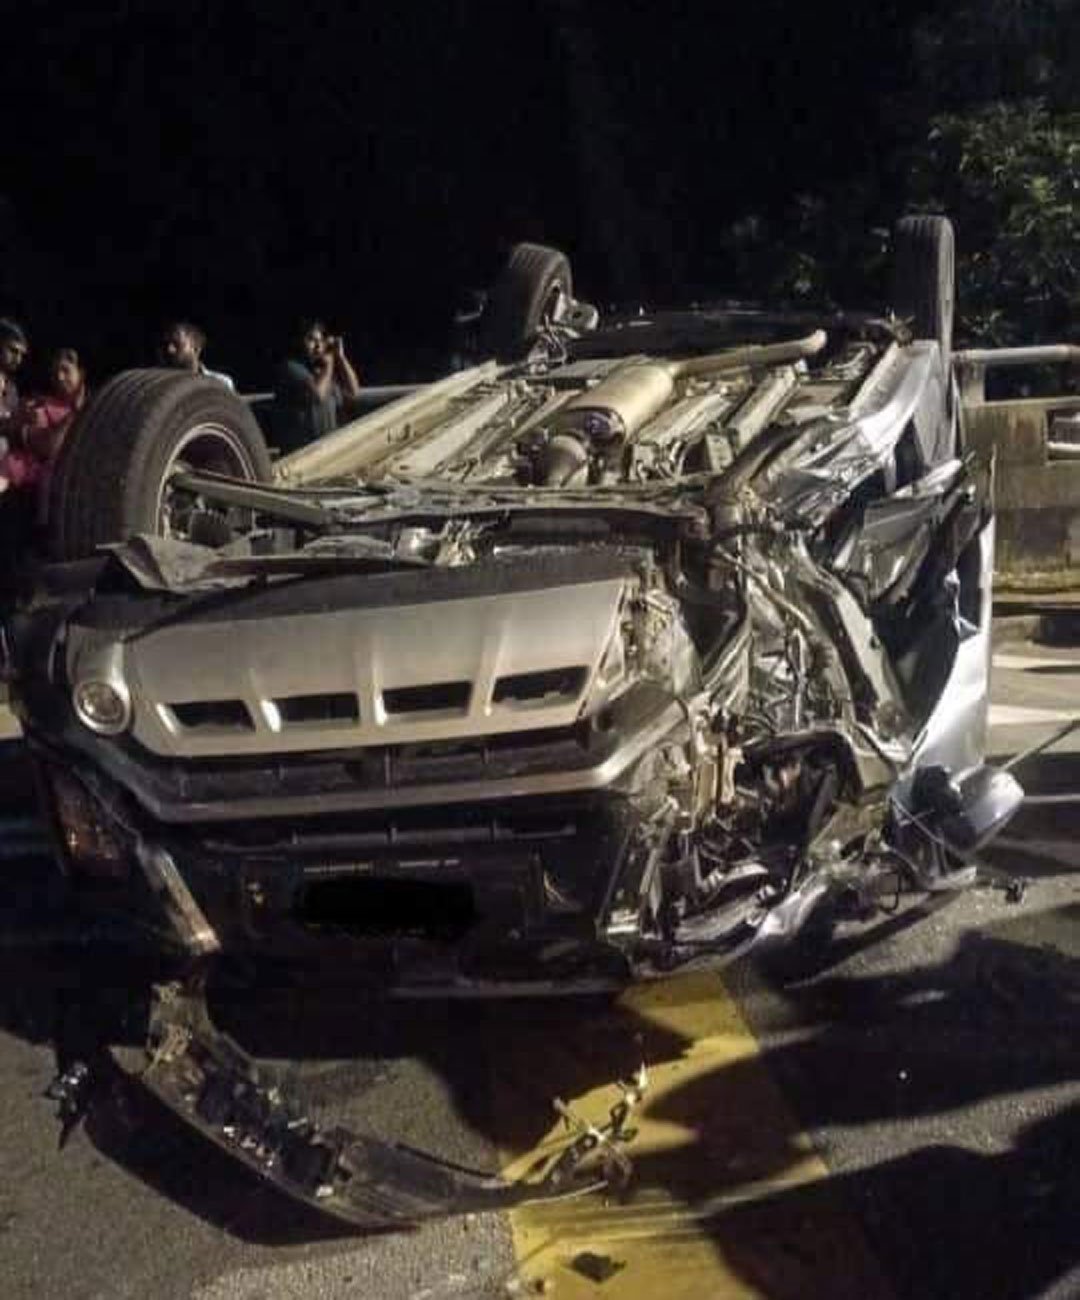 Beeza轿车被撞得四轮朝天，一家五口负伤及受到惊吓，被送医治疗。